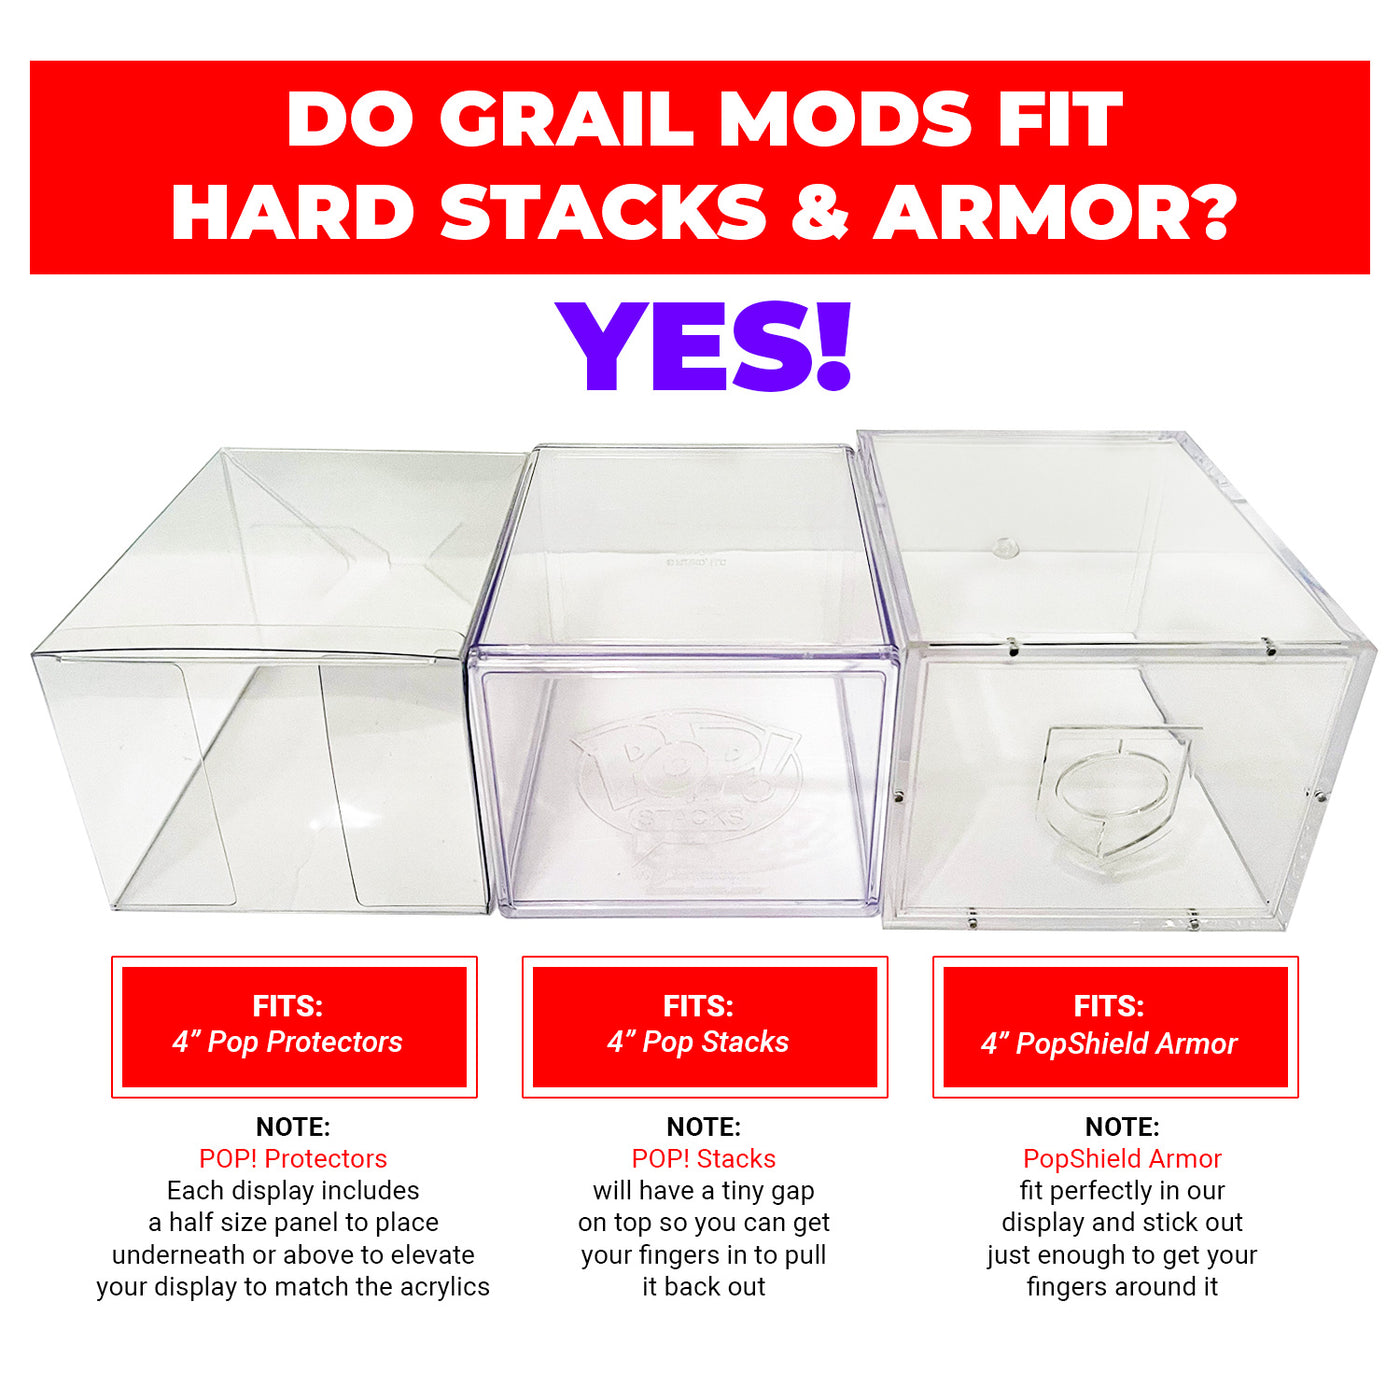 Does it fit? - Display Geek Grail Mods The Best Funko Pop Vinyl Display Case for Pop Shield Armor Hard Stacks DIY Vaulted Grail Wall Cubbies